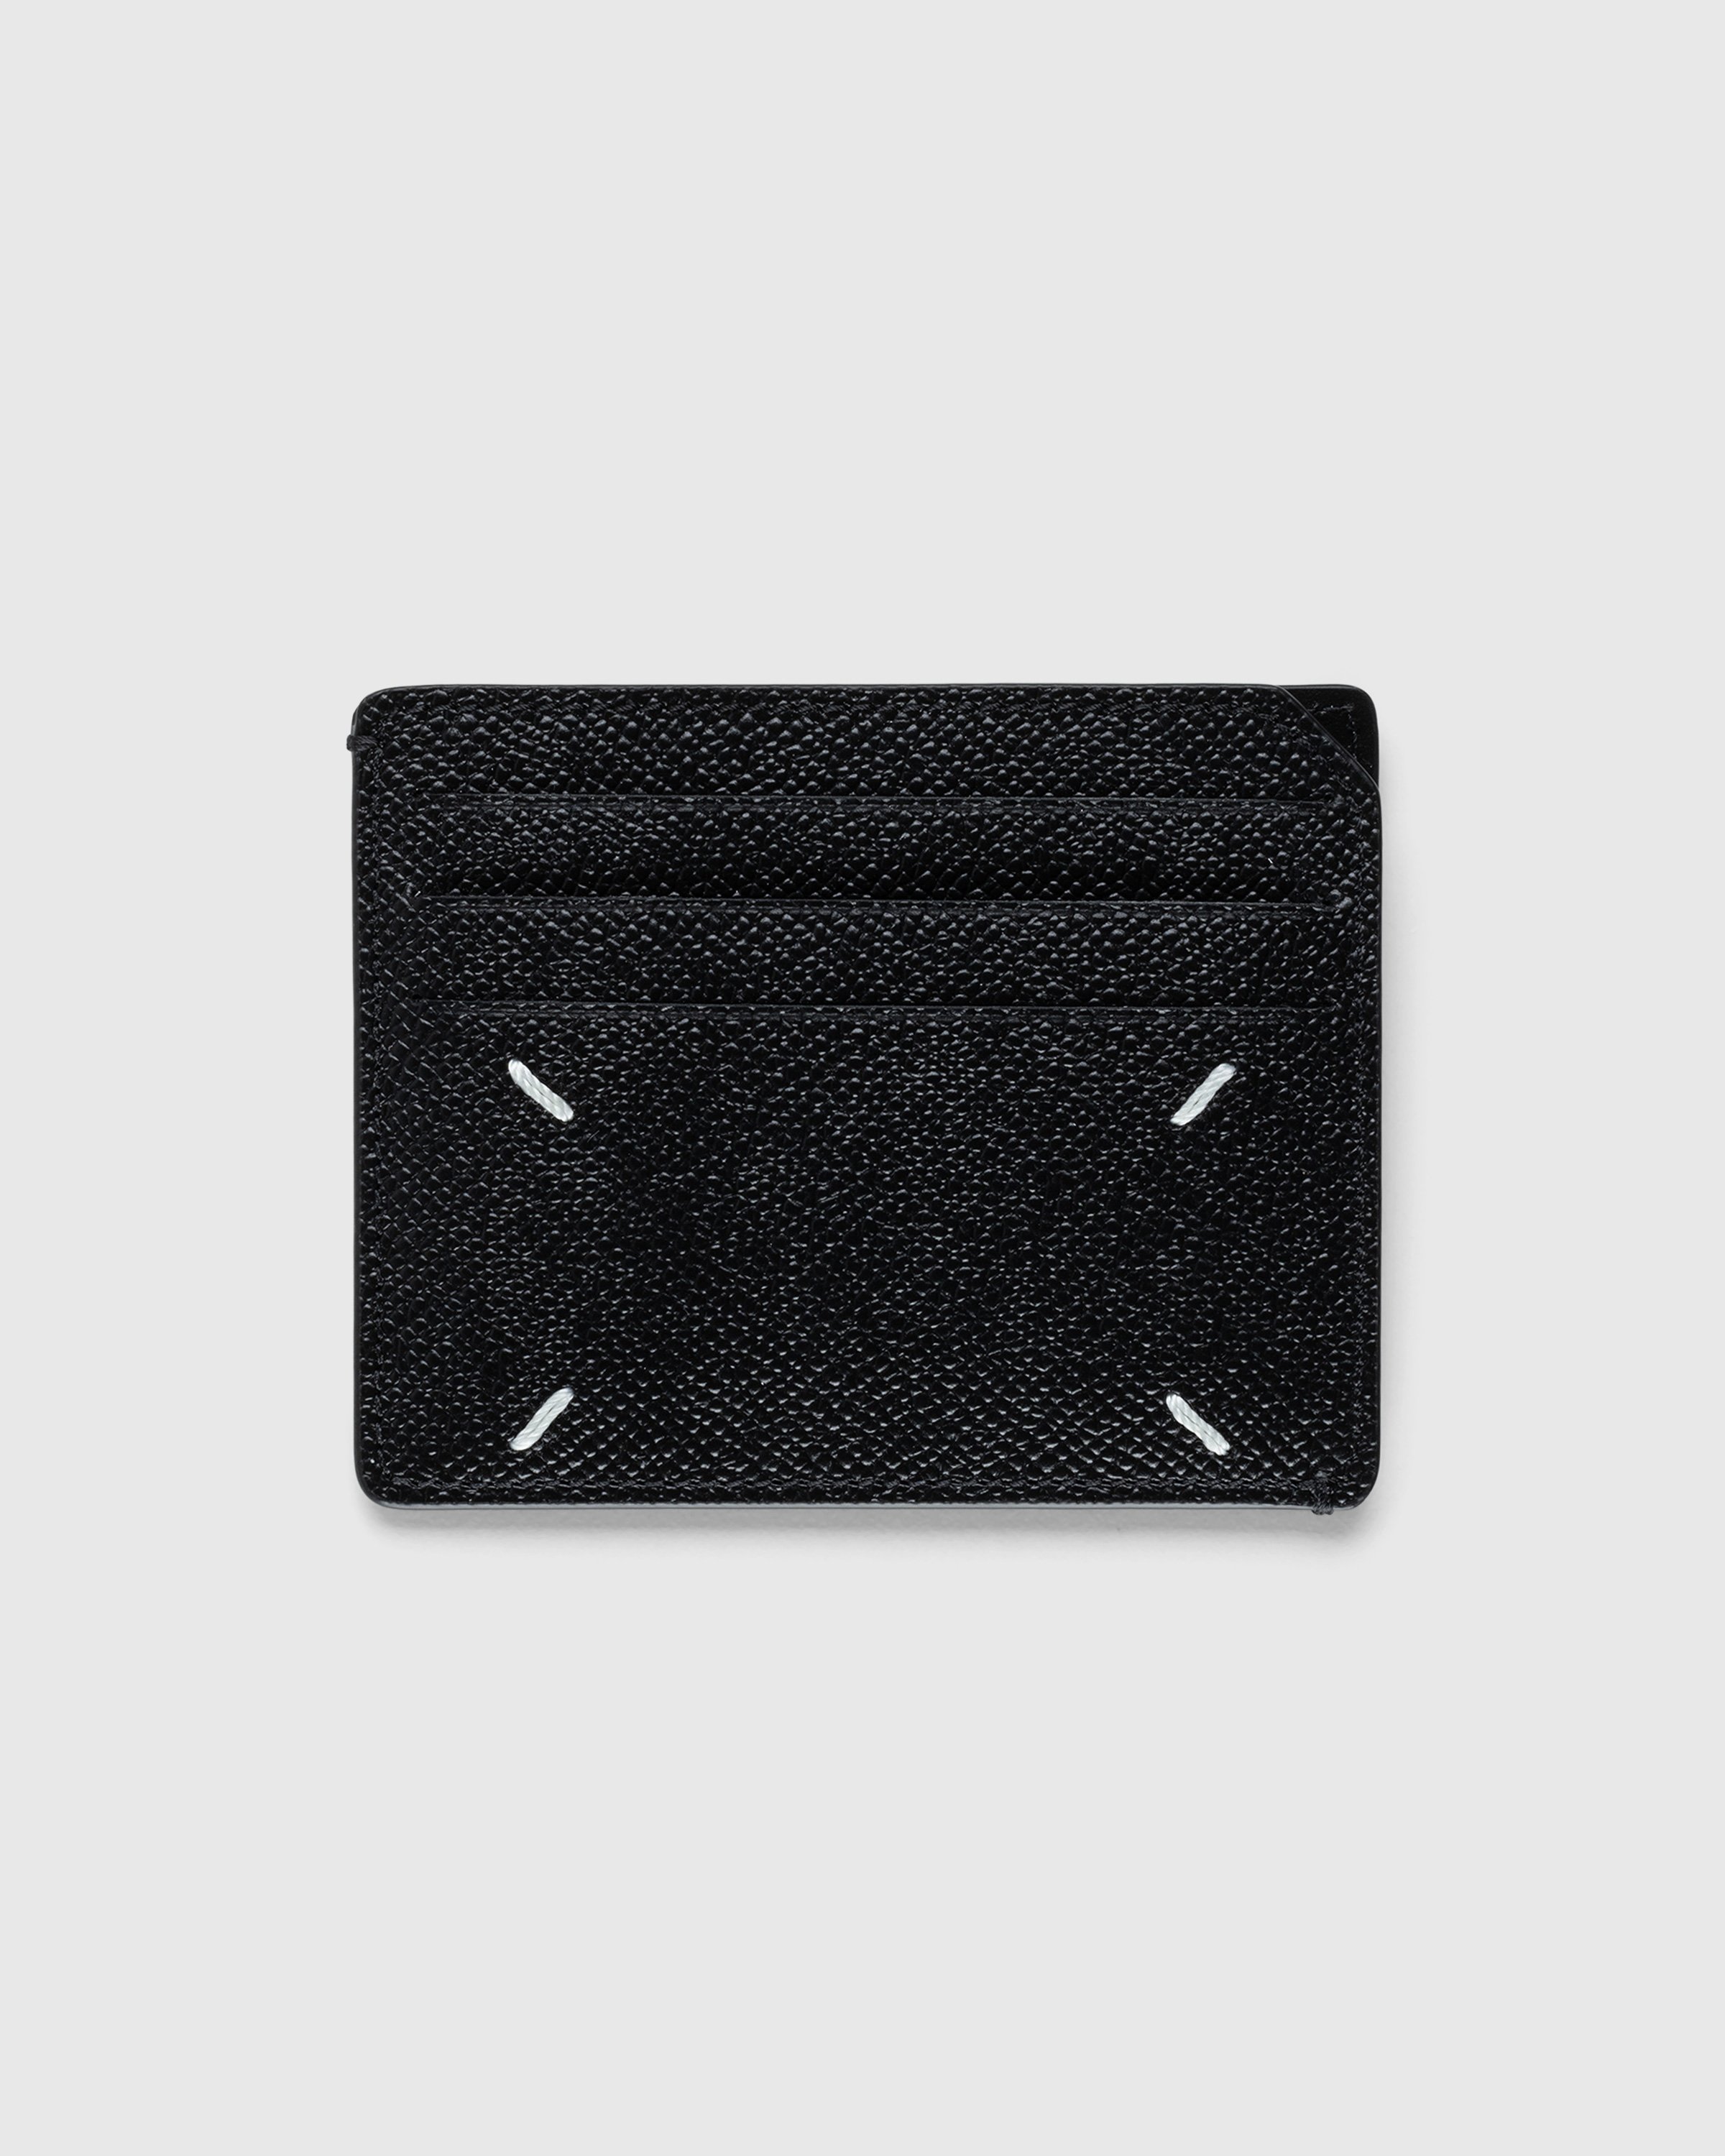 Maison Margiela - Leather Card Holder Black - Accessories - Green - Image 1